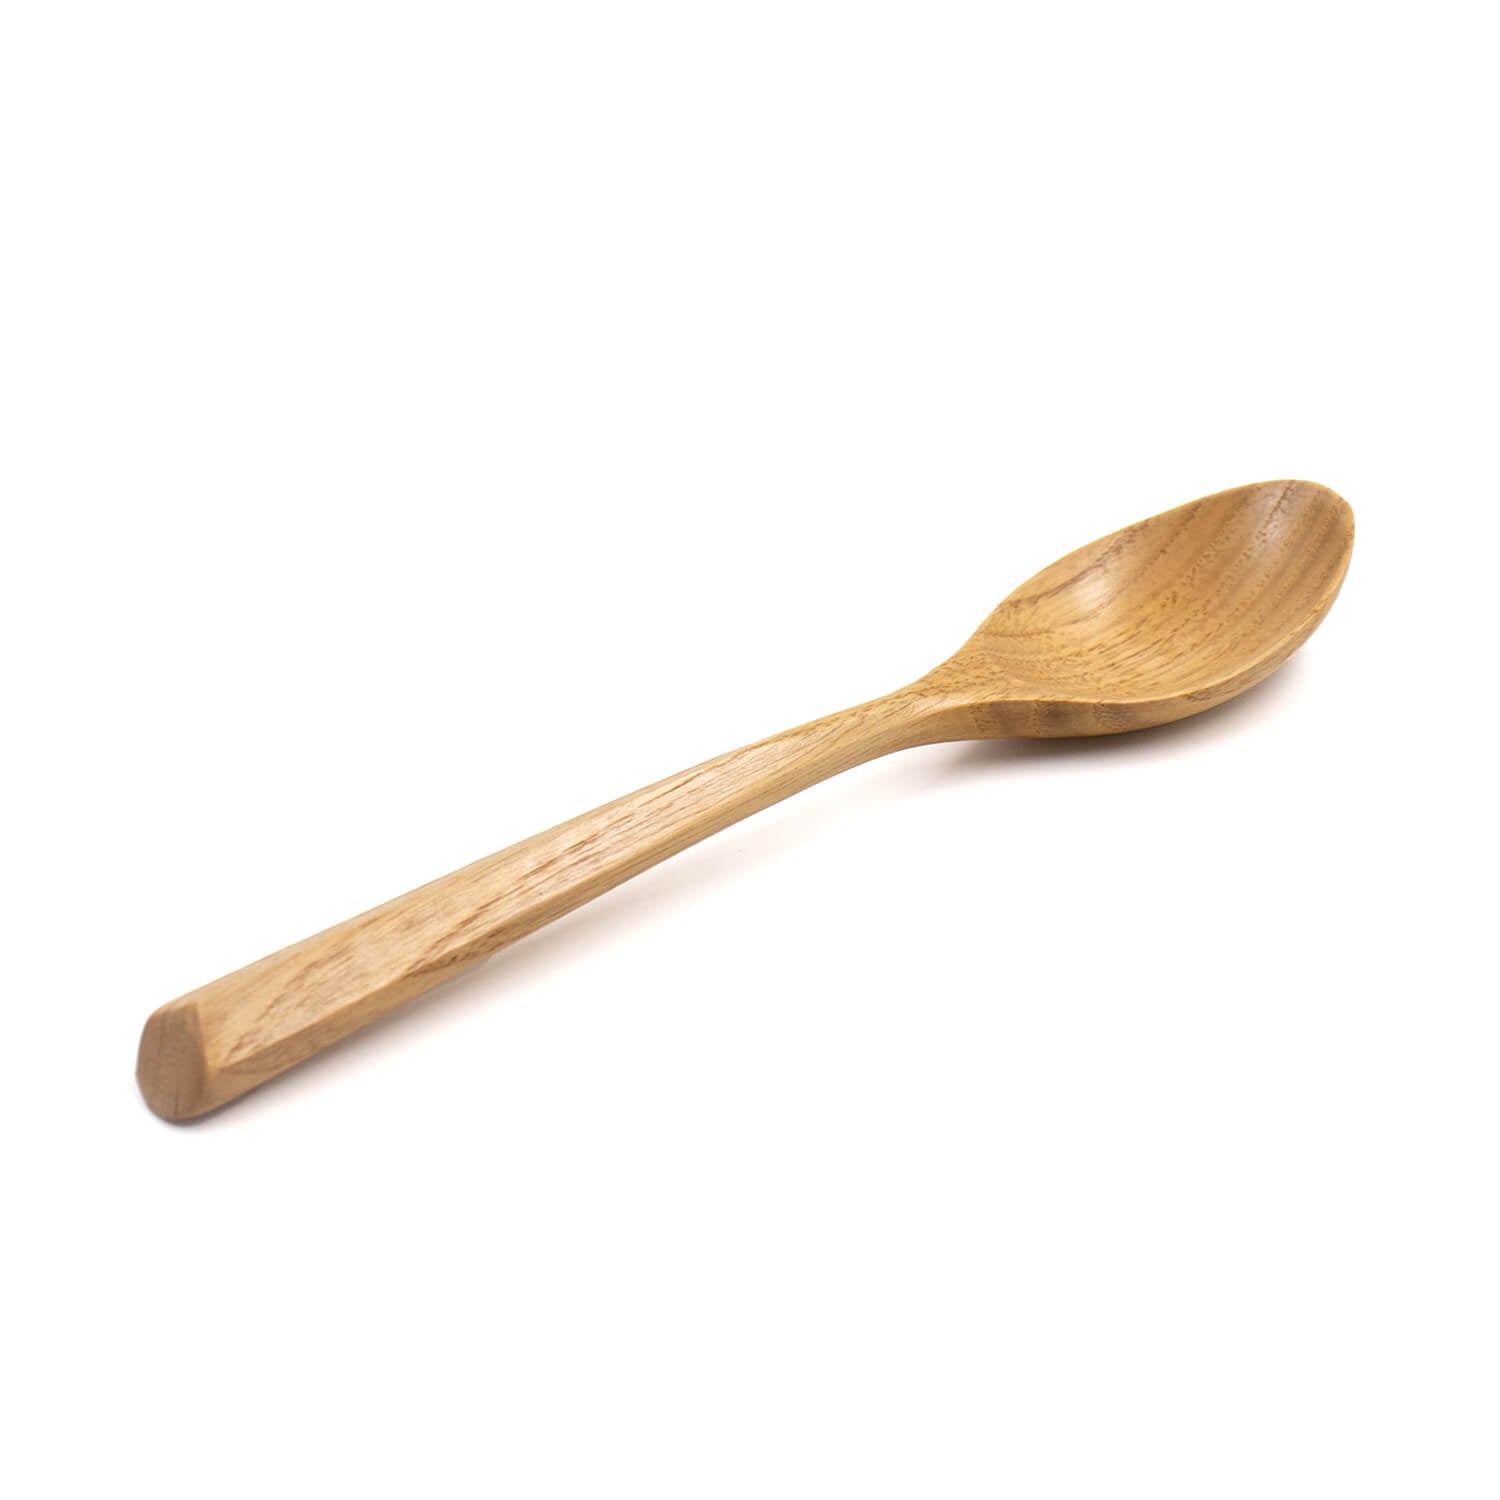 Chestnut wood spoon 190mm